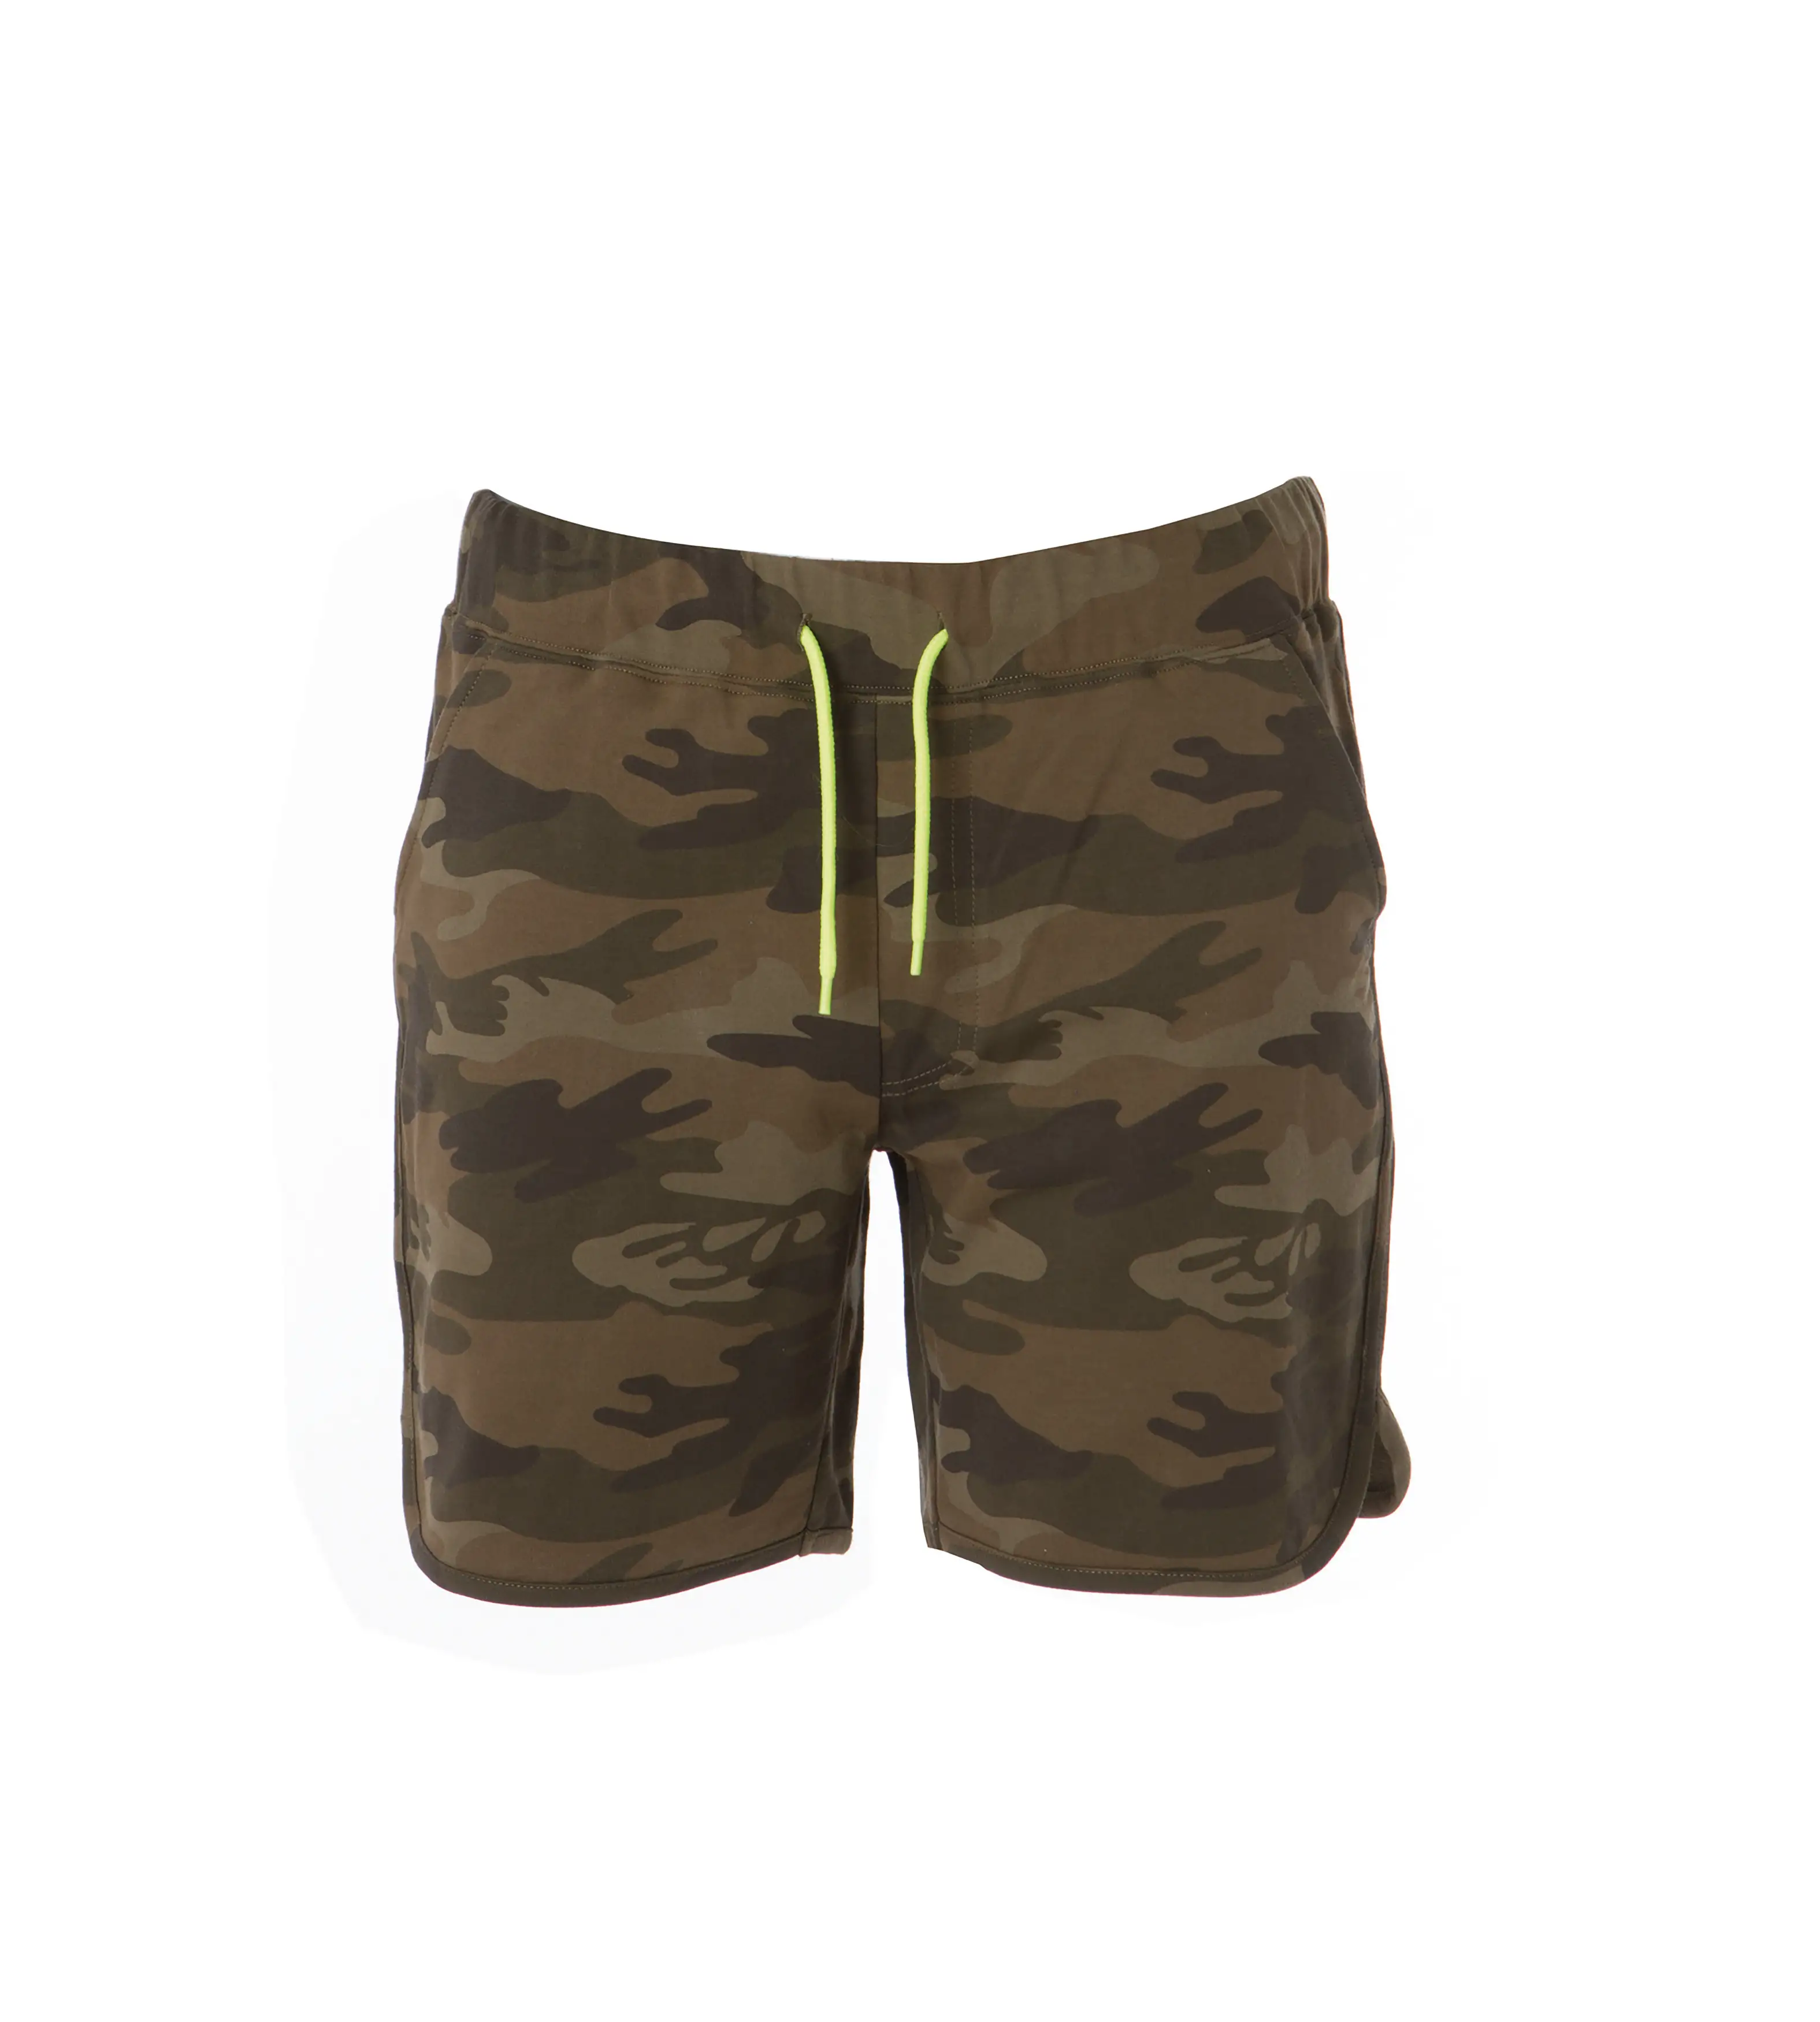 Pantalone creta man - camouflage green - s